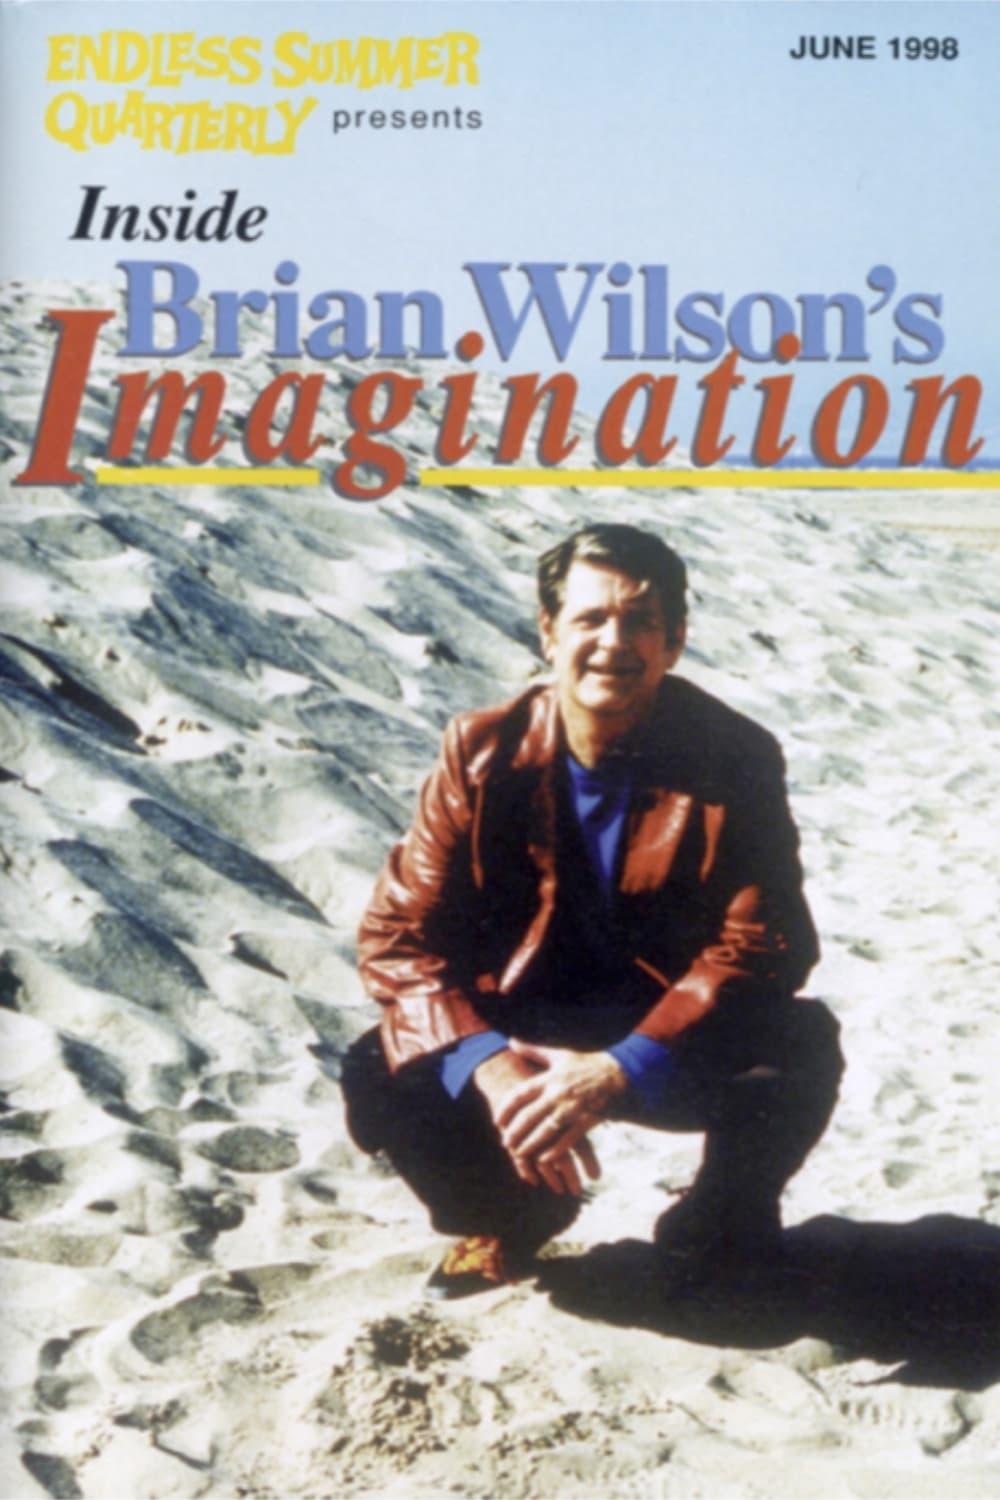 Brian Wilson’s Imagination poster